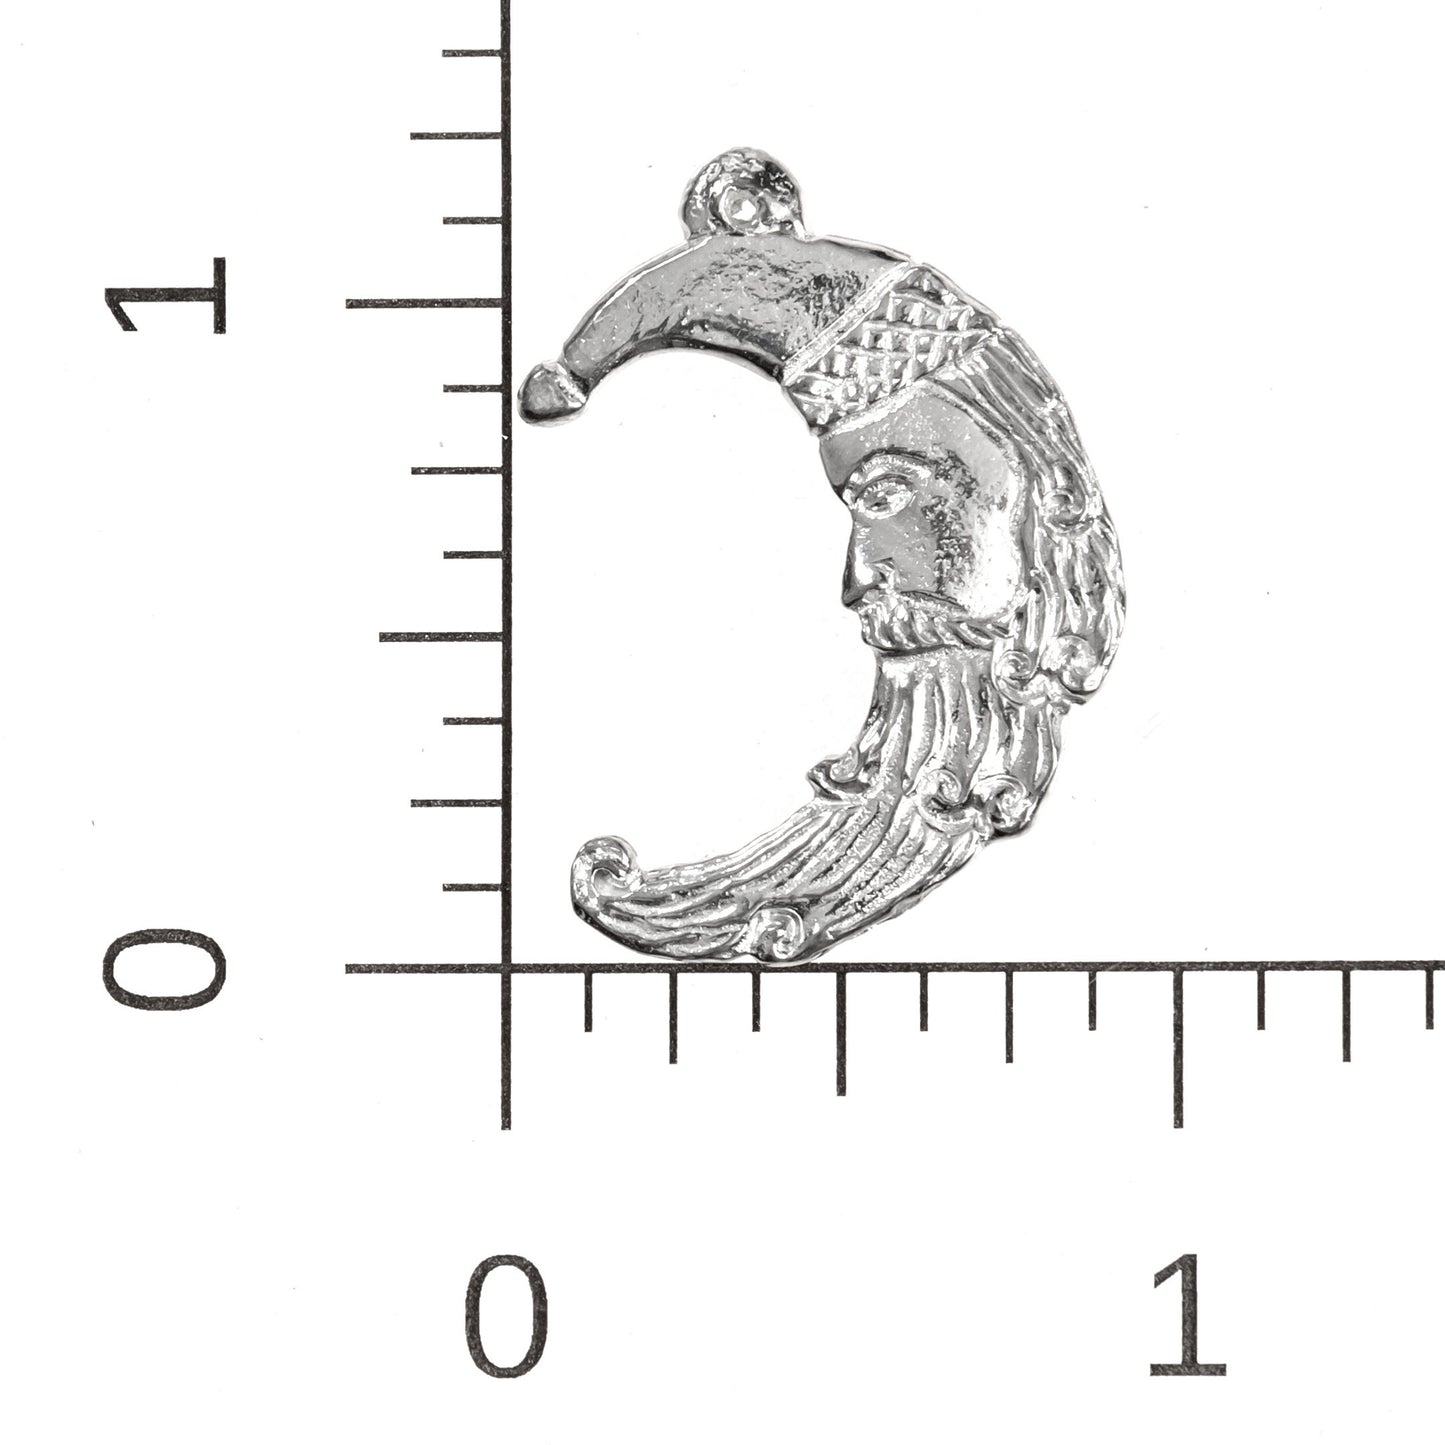 Santa Face Half Moon Jewelry Gifts -Santa Face Half Moon Pendant - Necklaces - Earrings - Keychain